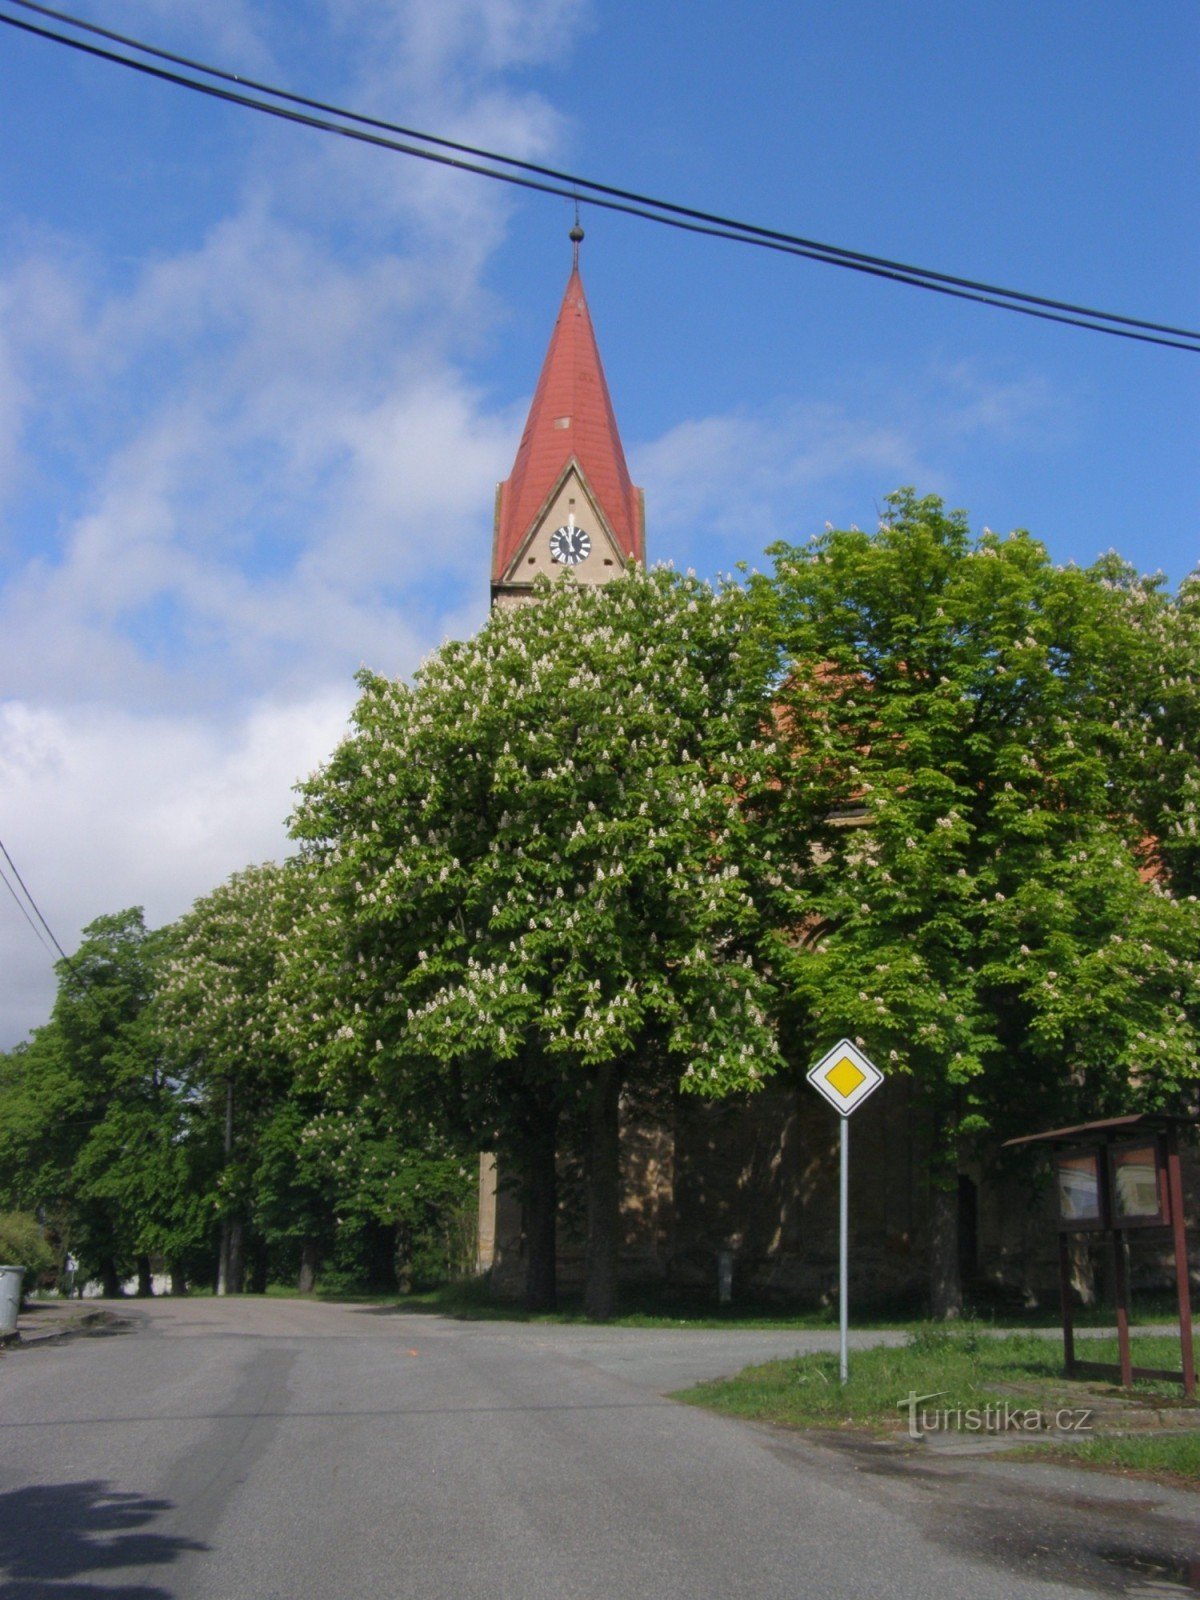 Abuela - Iglesia de St. Pedro y Pablo